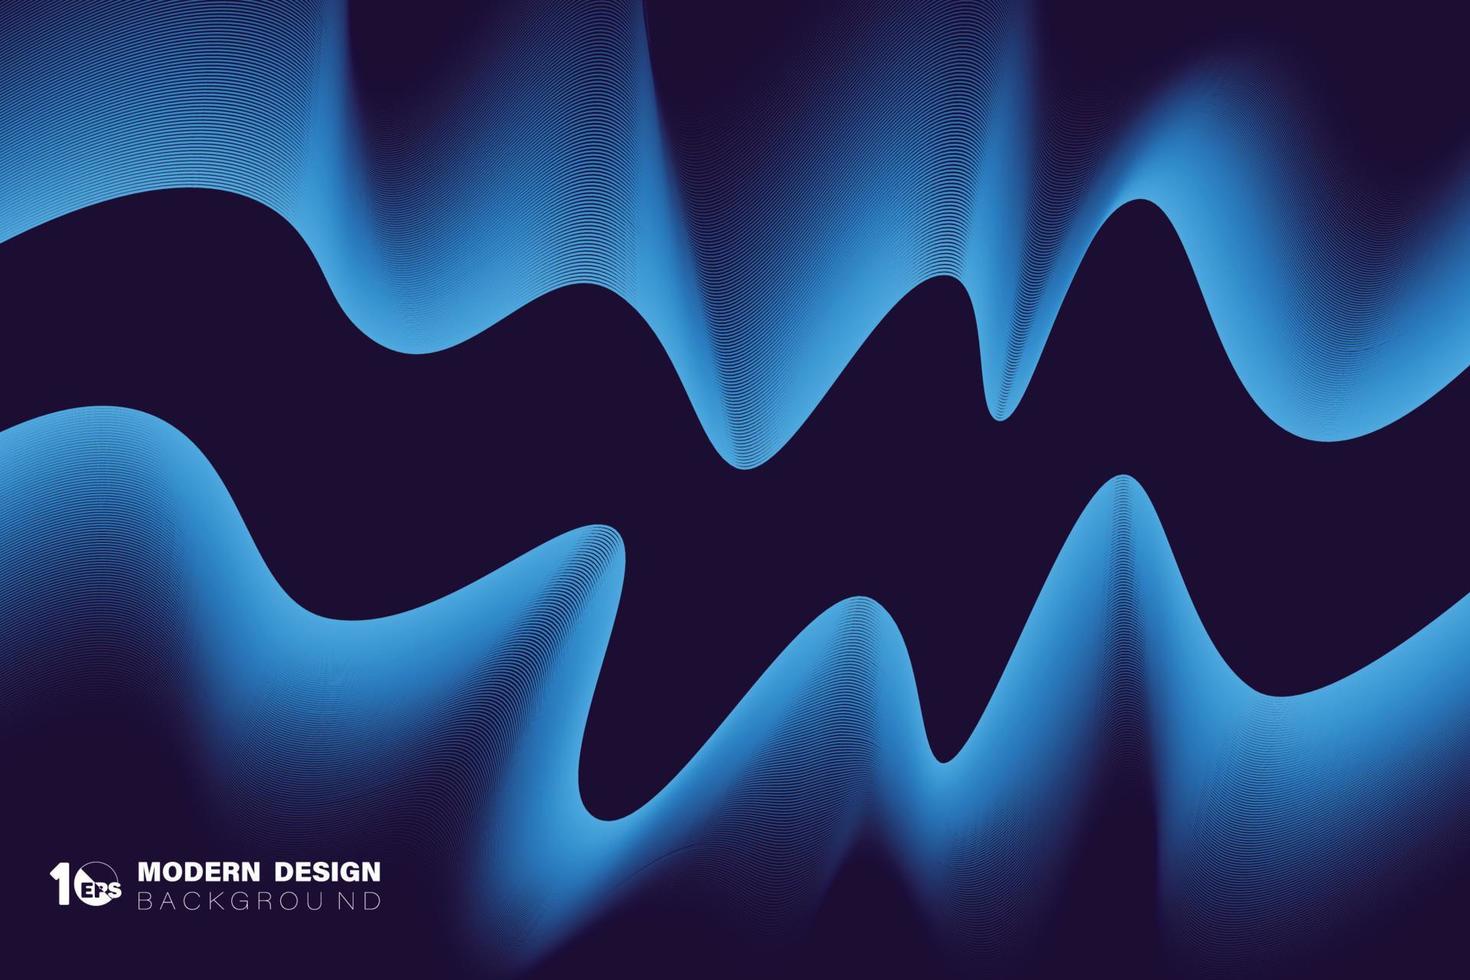 abstrakt blå tech linje vågigt mönster av teknik konstverk bakgrund. illustration vektor eps10